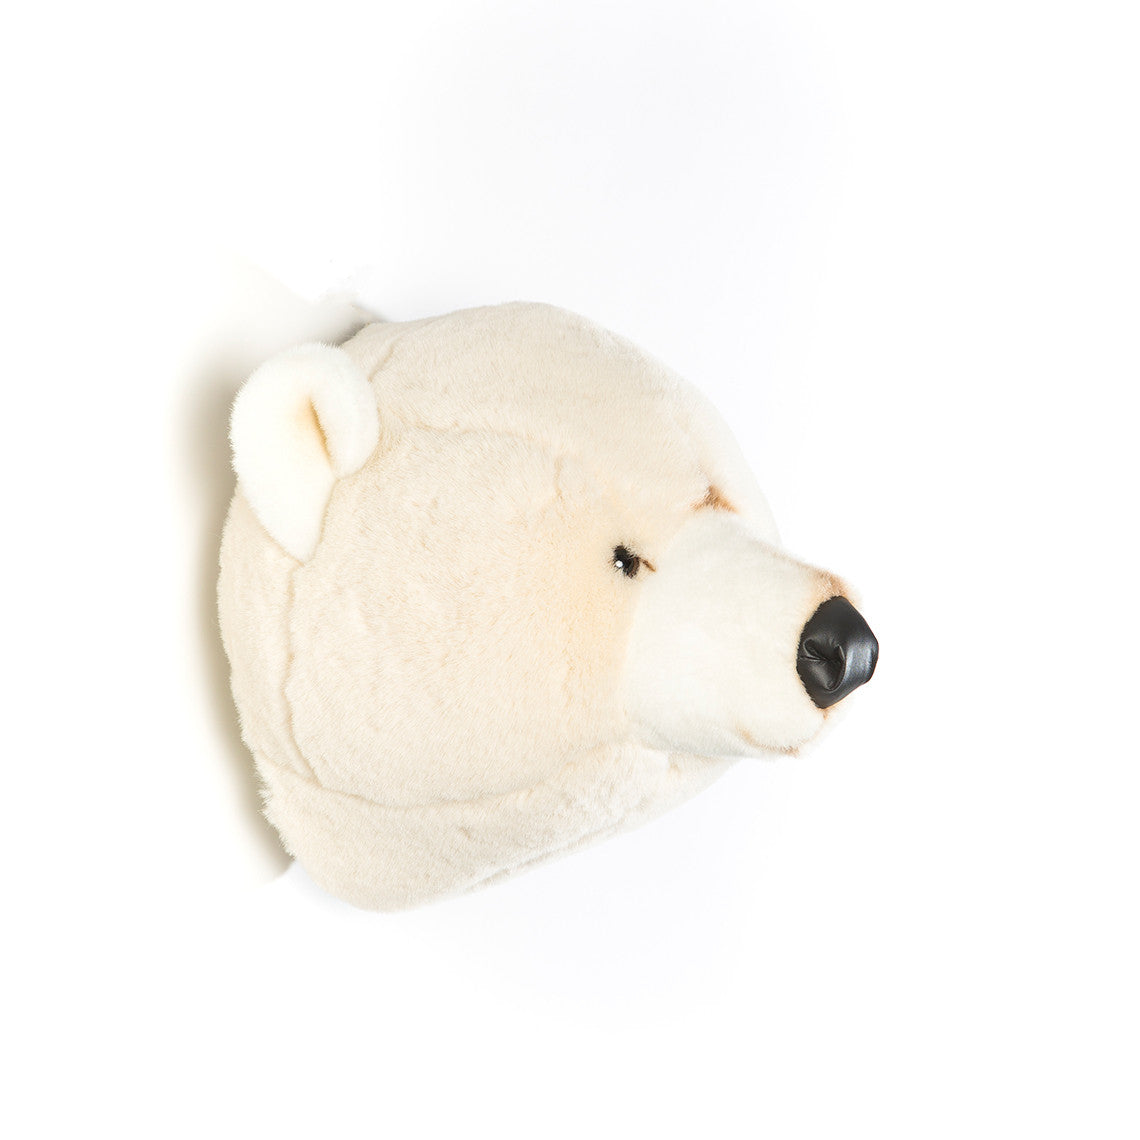 Animal Trophy Heads - White Bear Basile